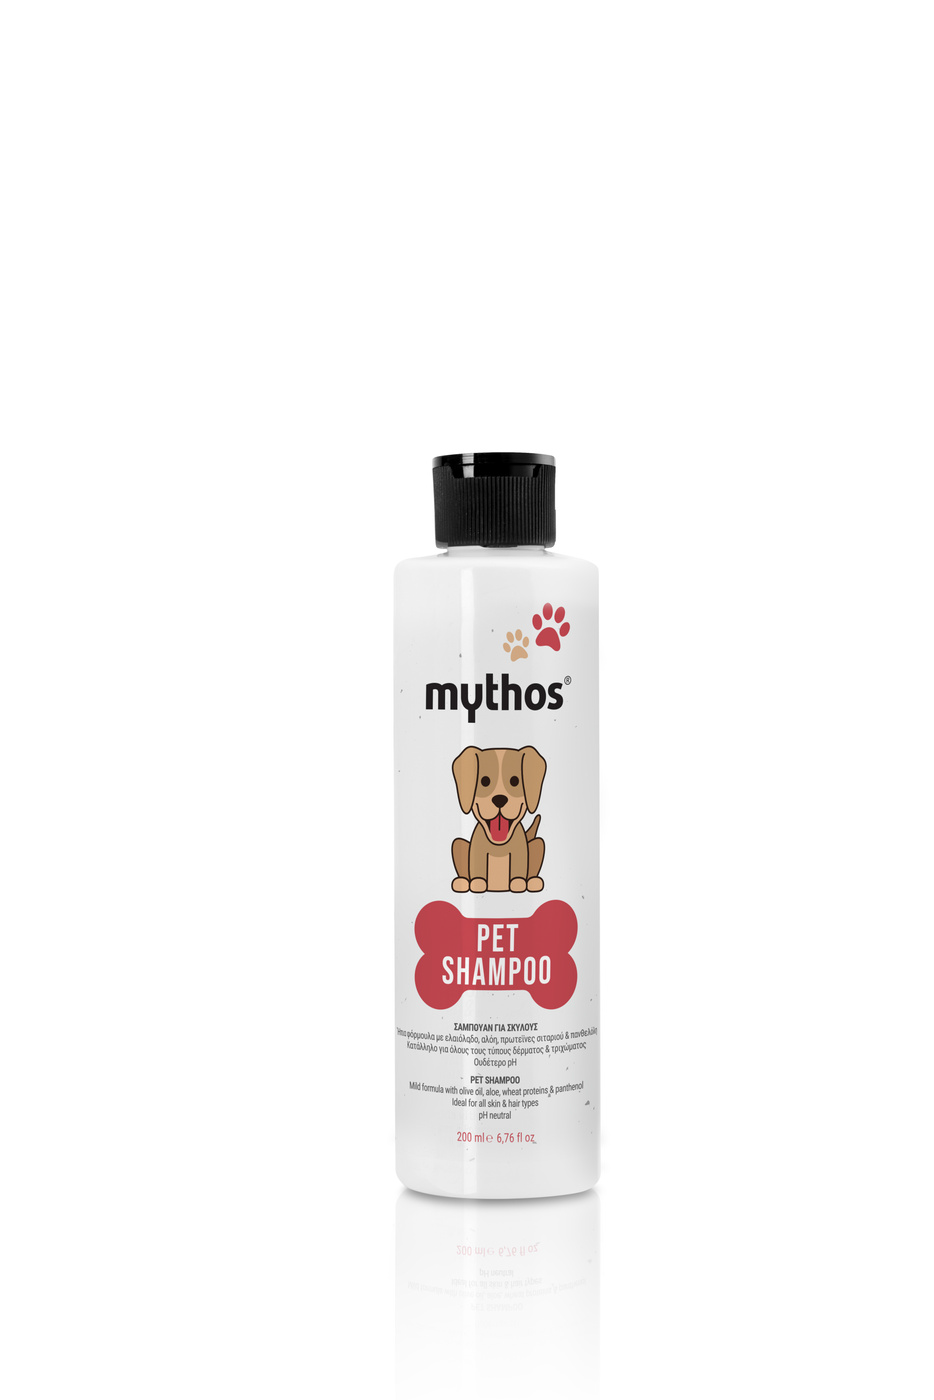 MYTHOS Shampoo For Dogs Pet Shampoo 200ml Ref:542033